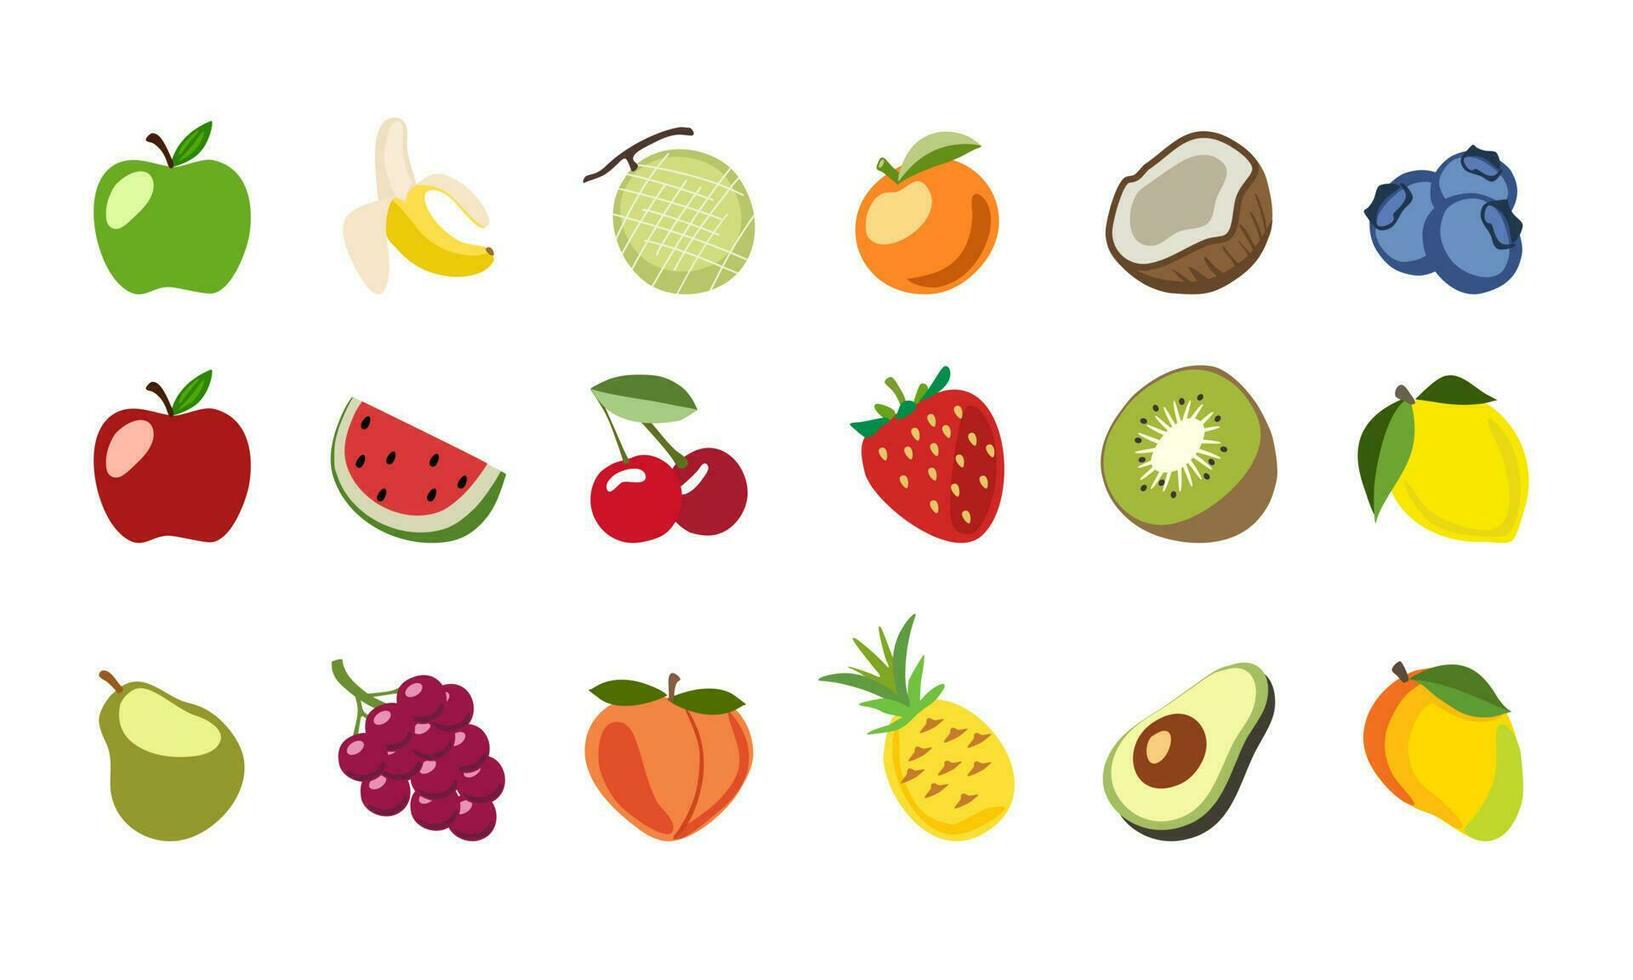 https://static.vecteezy.com/system/resources/previews/006/647/916/non_2x/fruit-apple-banana-melon-orange-coconut-blueberry-watermelon-cherry-strawberry-kiwi-lemon-pear-grape-peach-pineapple-avocado-mango-free-vector.jpg